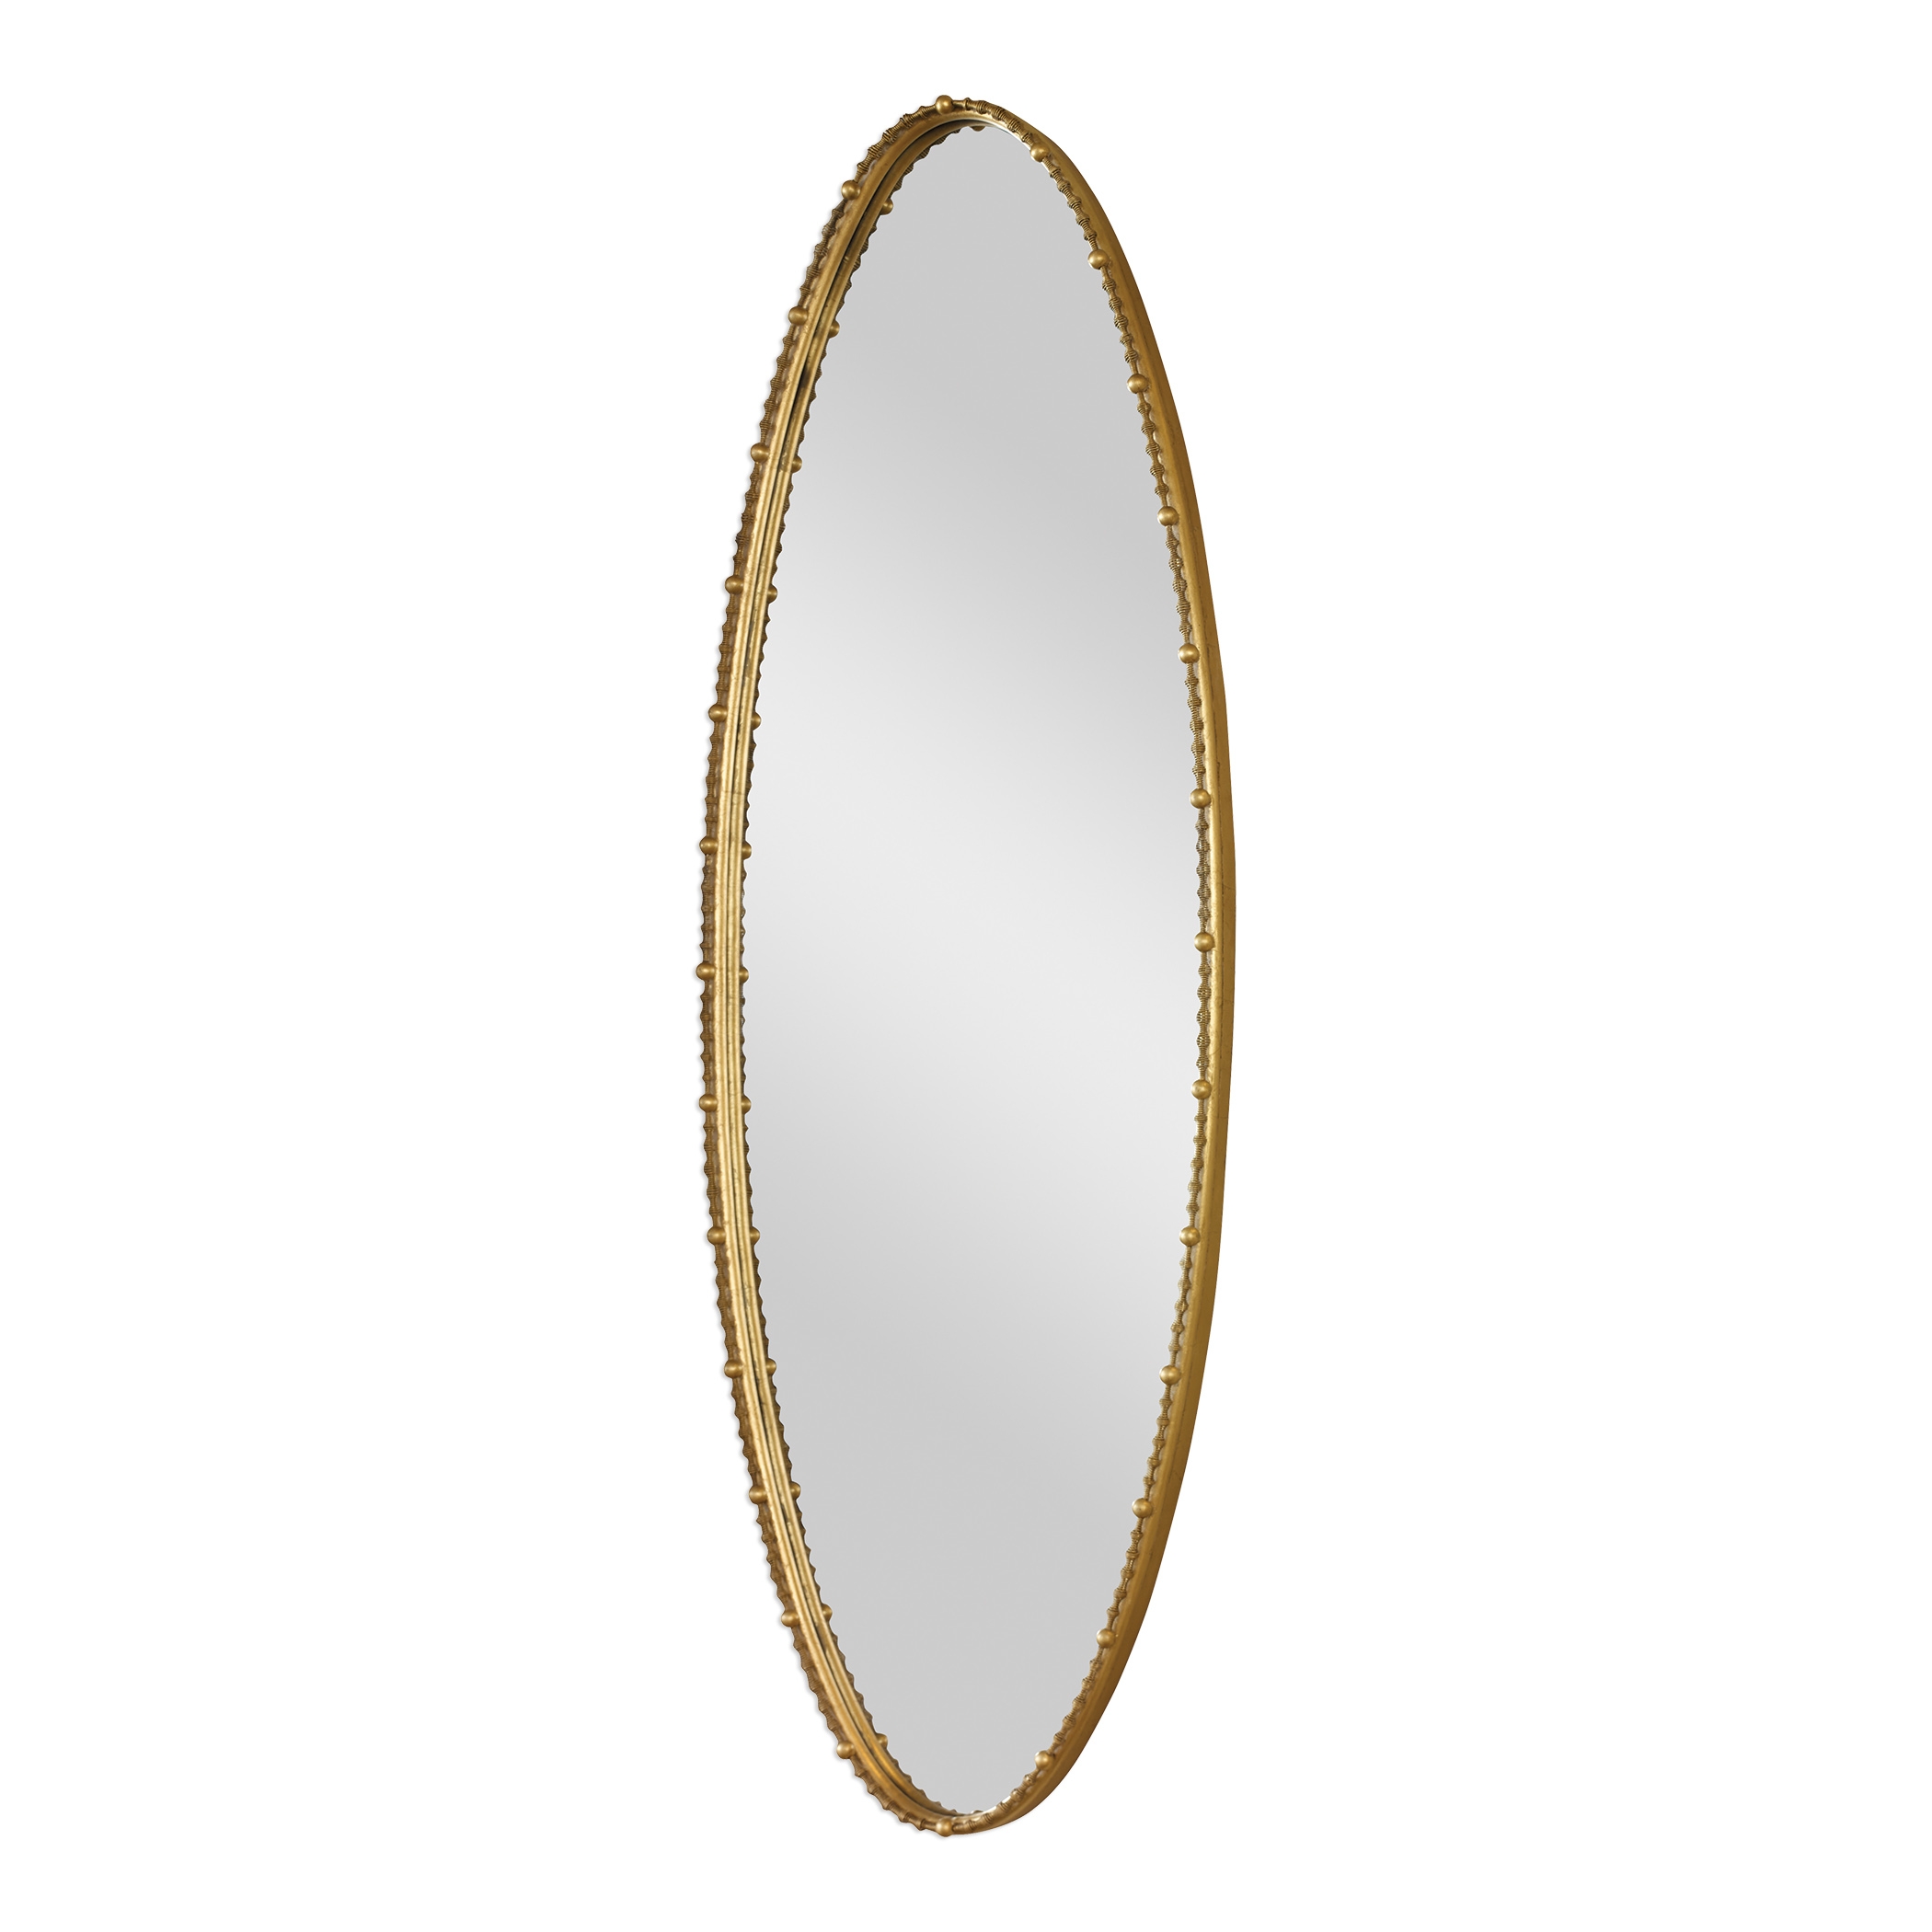 Hadea Gold Oval Mirror - Image 1